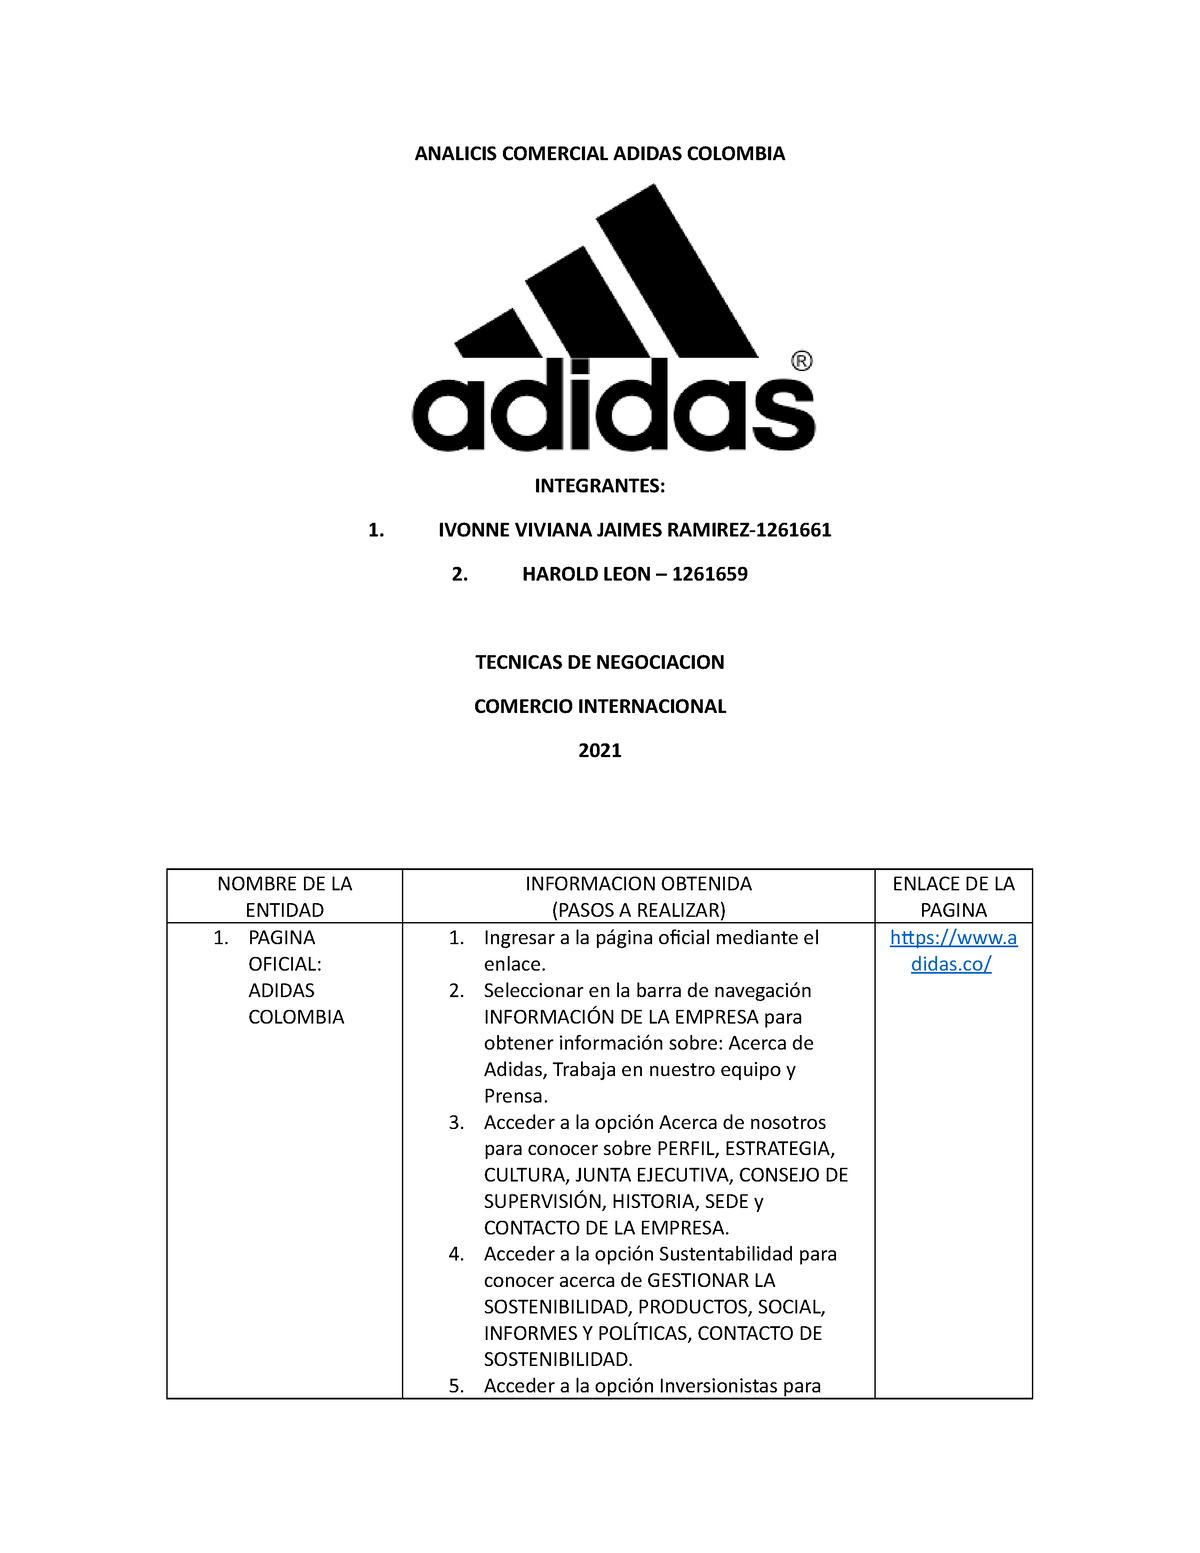 Analisis Comercial Adidas - ANALICIS COMERCIAL COLOMBIA INTEGRANTES: 1. IVONNE VIVIANA JAIMES - Studocu